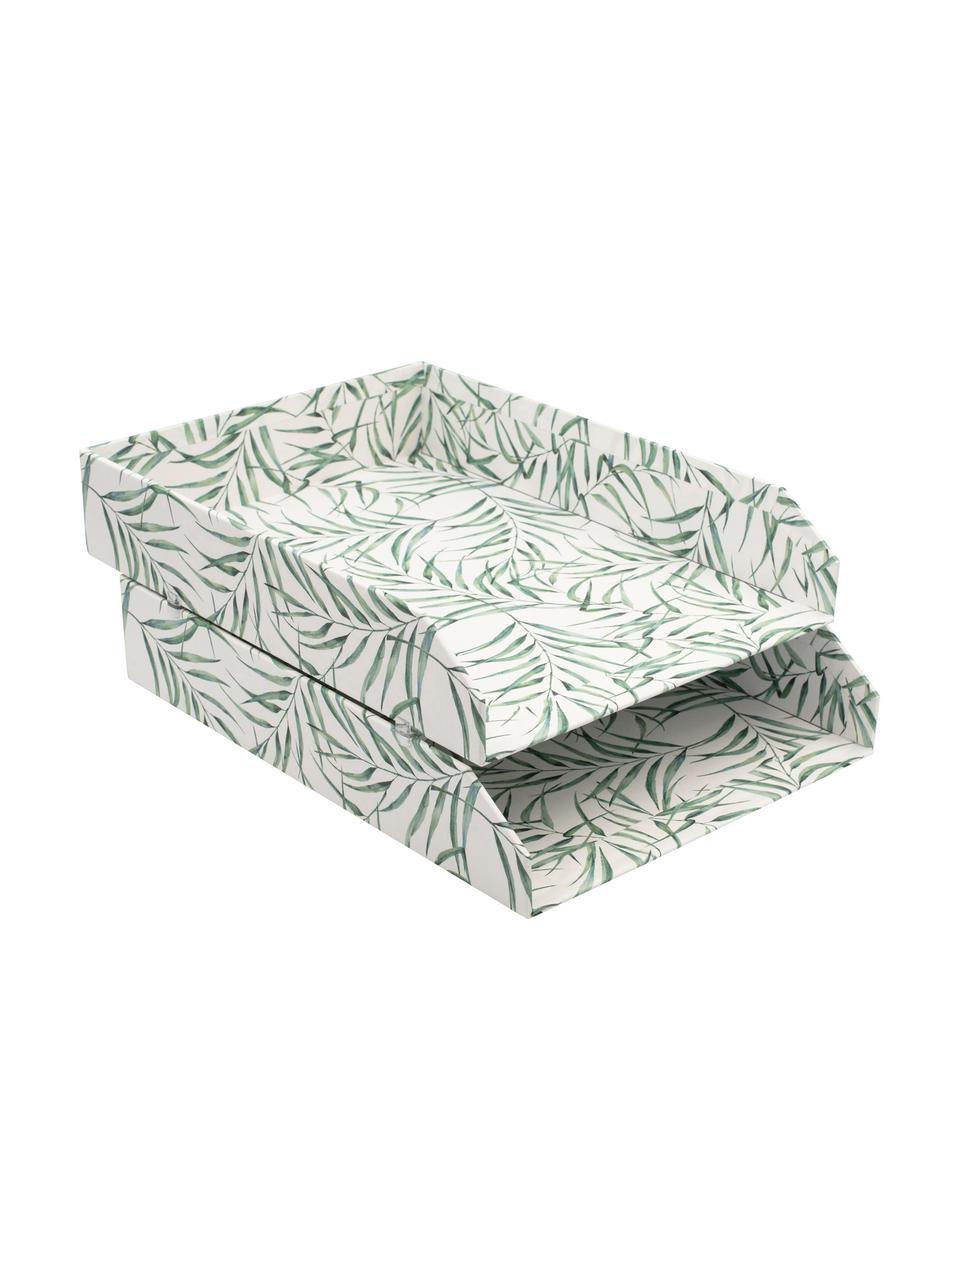 Kancelářský box Leaf, 2 ks, Pevná laminovaná lepenka, Bílá, zelená, Š 23 cm, H 31 cm